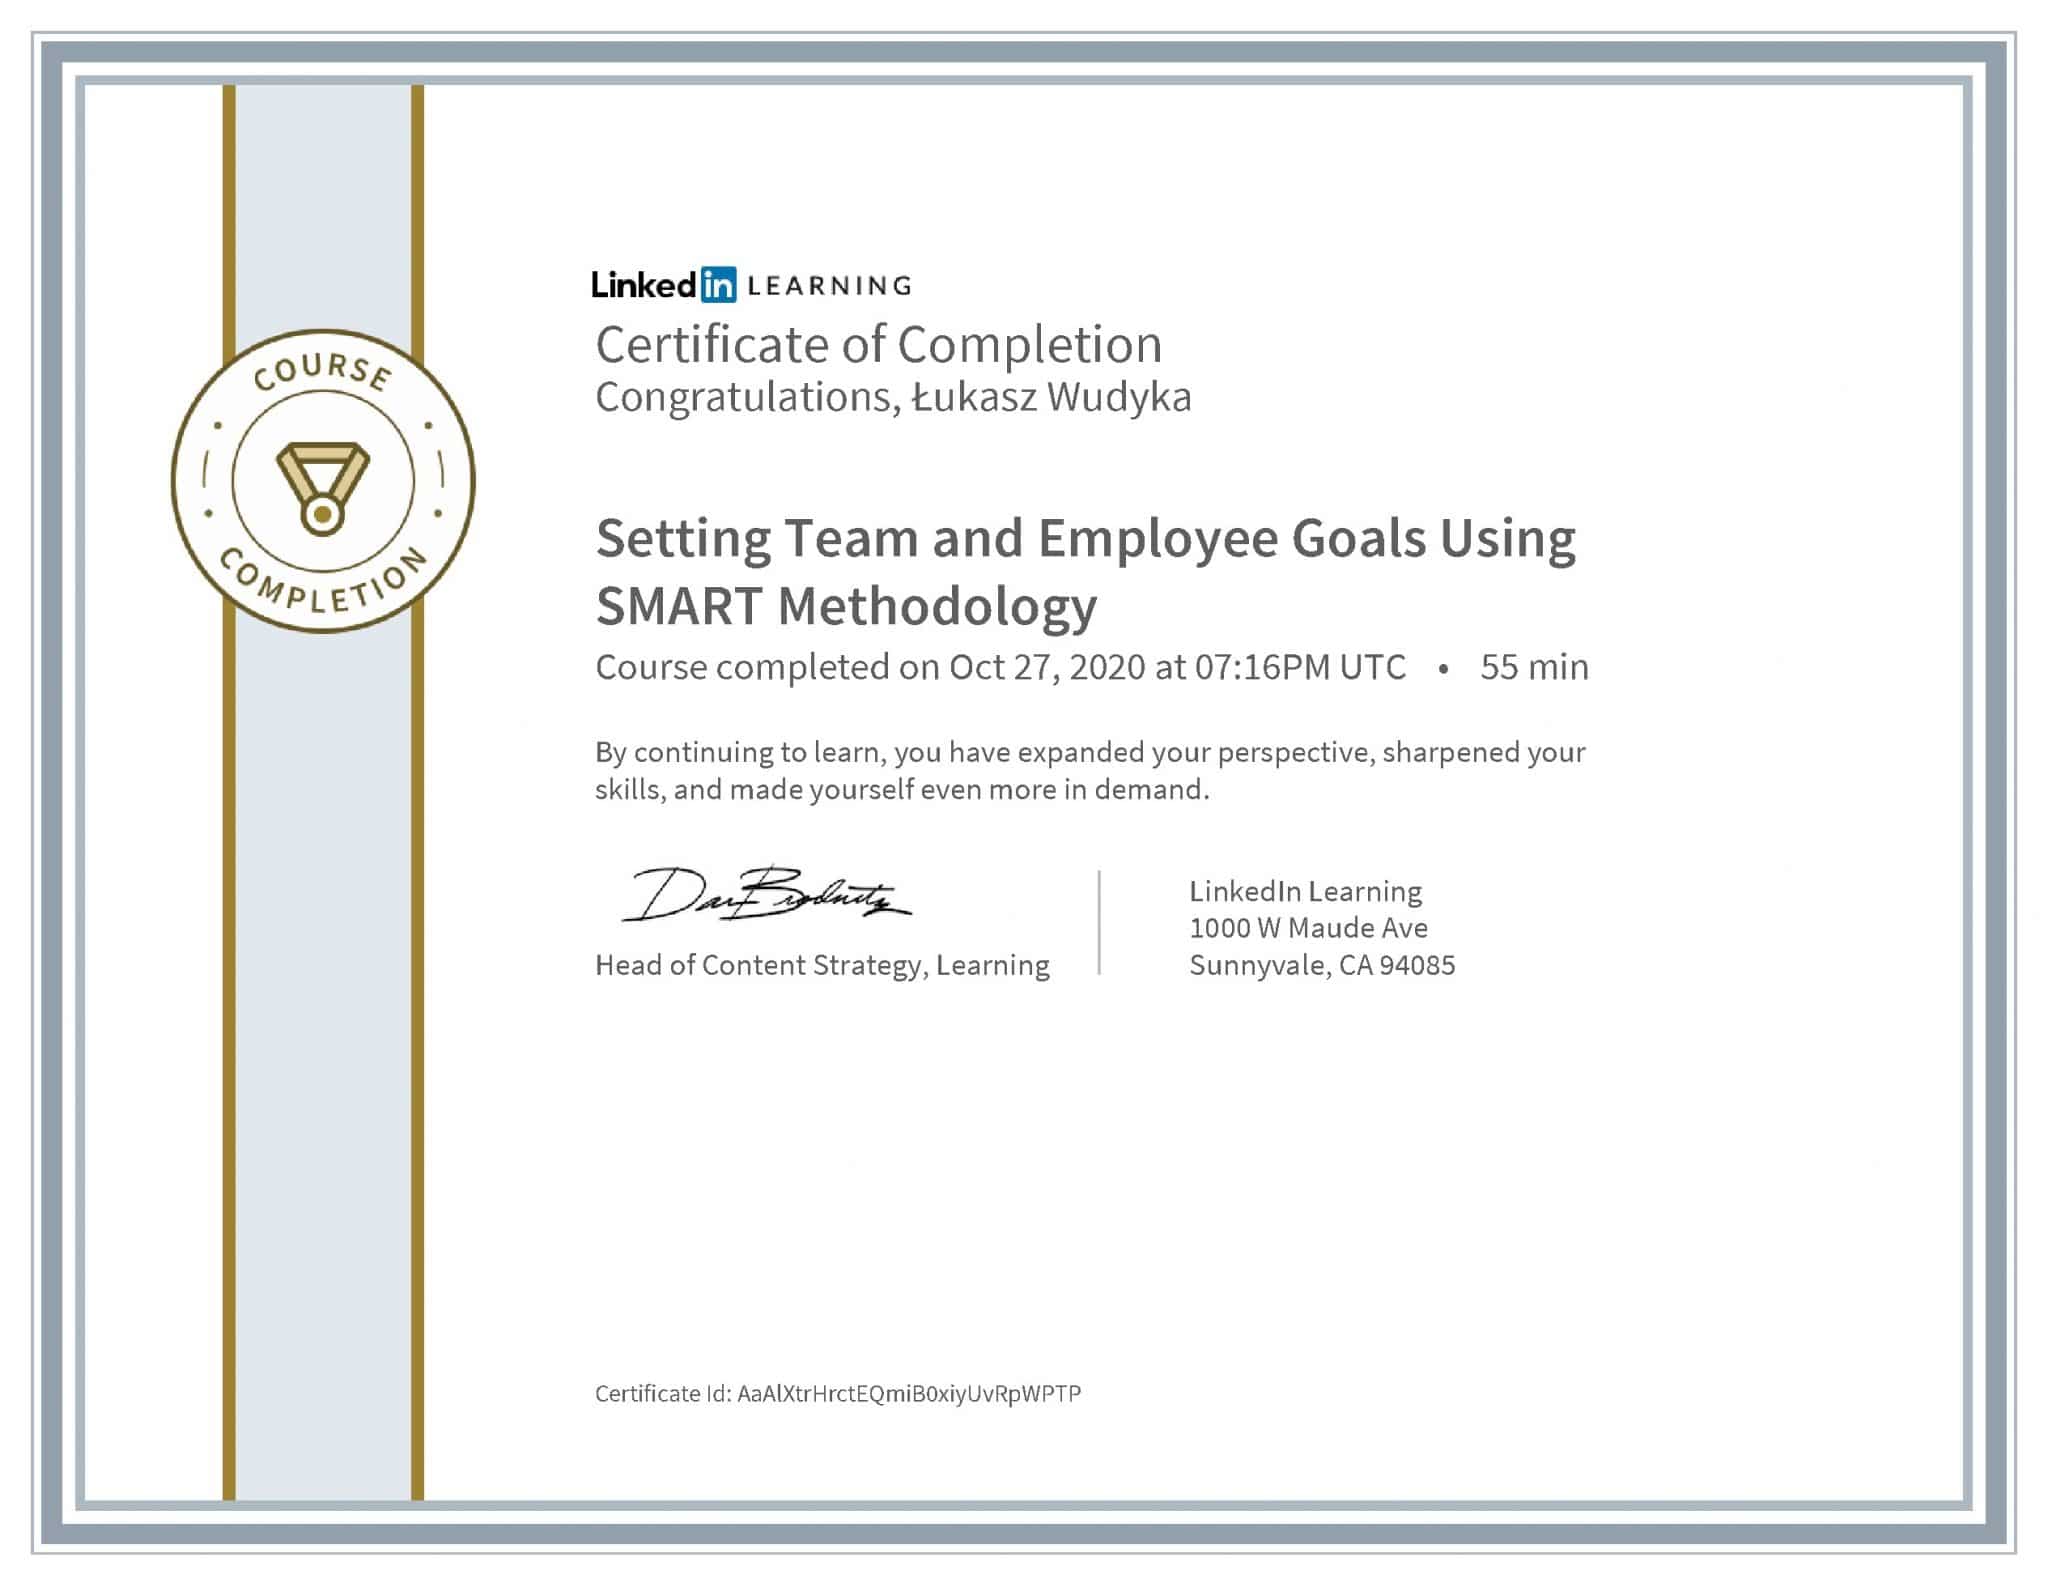 Łukasz Wudyka certyfikat LinkedIn Setting Team and Employee Goals Using SMART Methodology